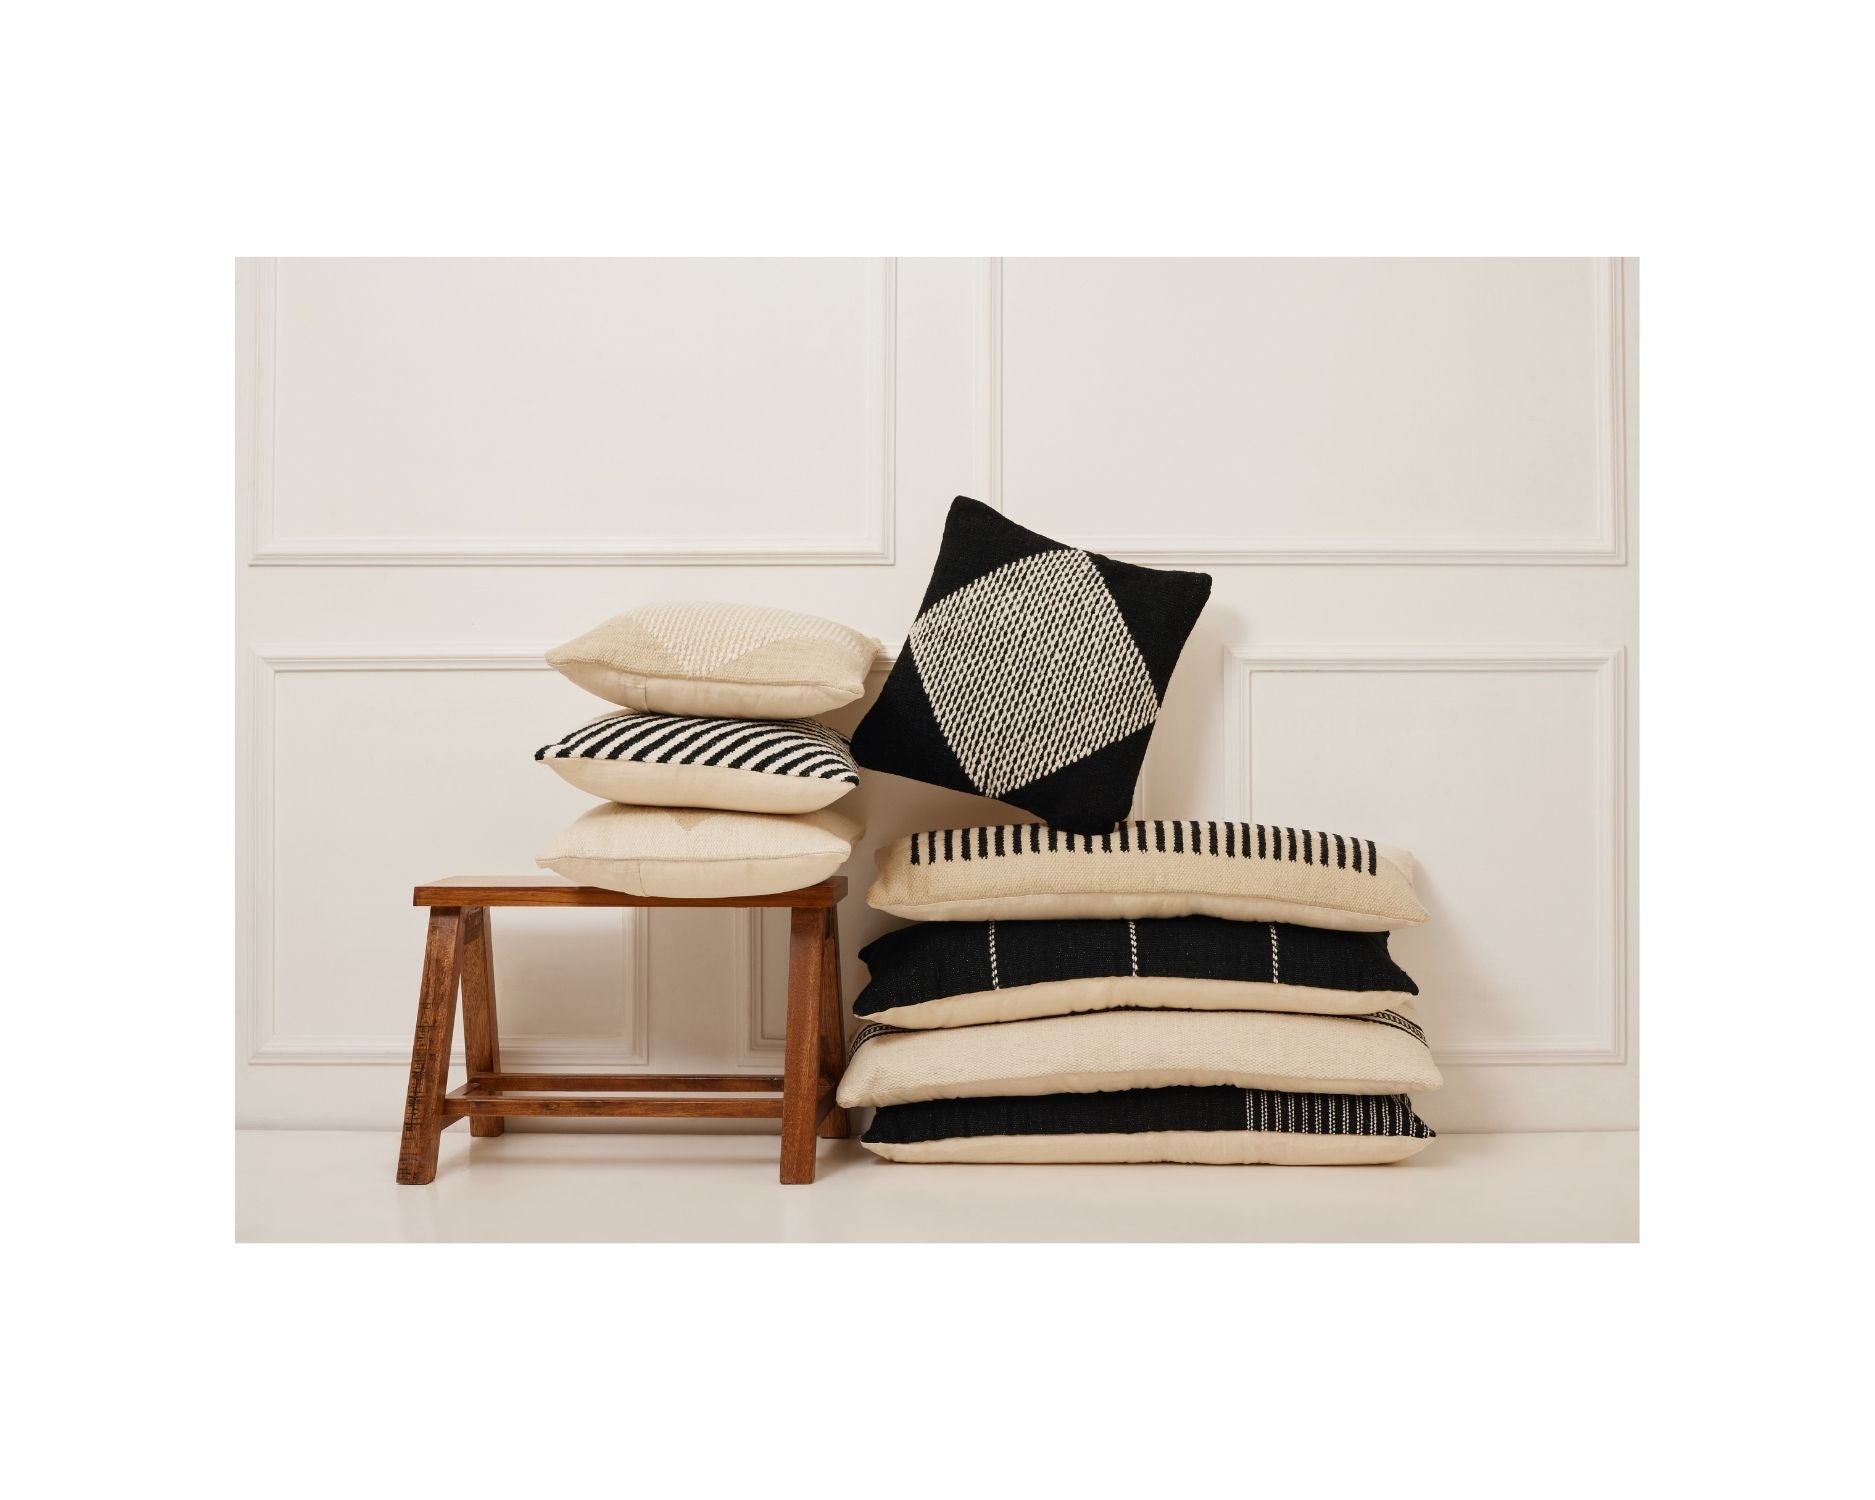 Stripe Lumbar Pillow - Black - 12x34 Inch